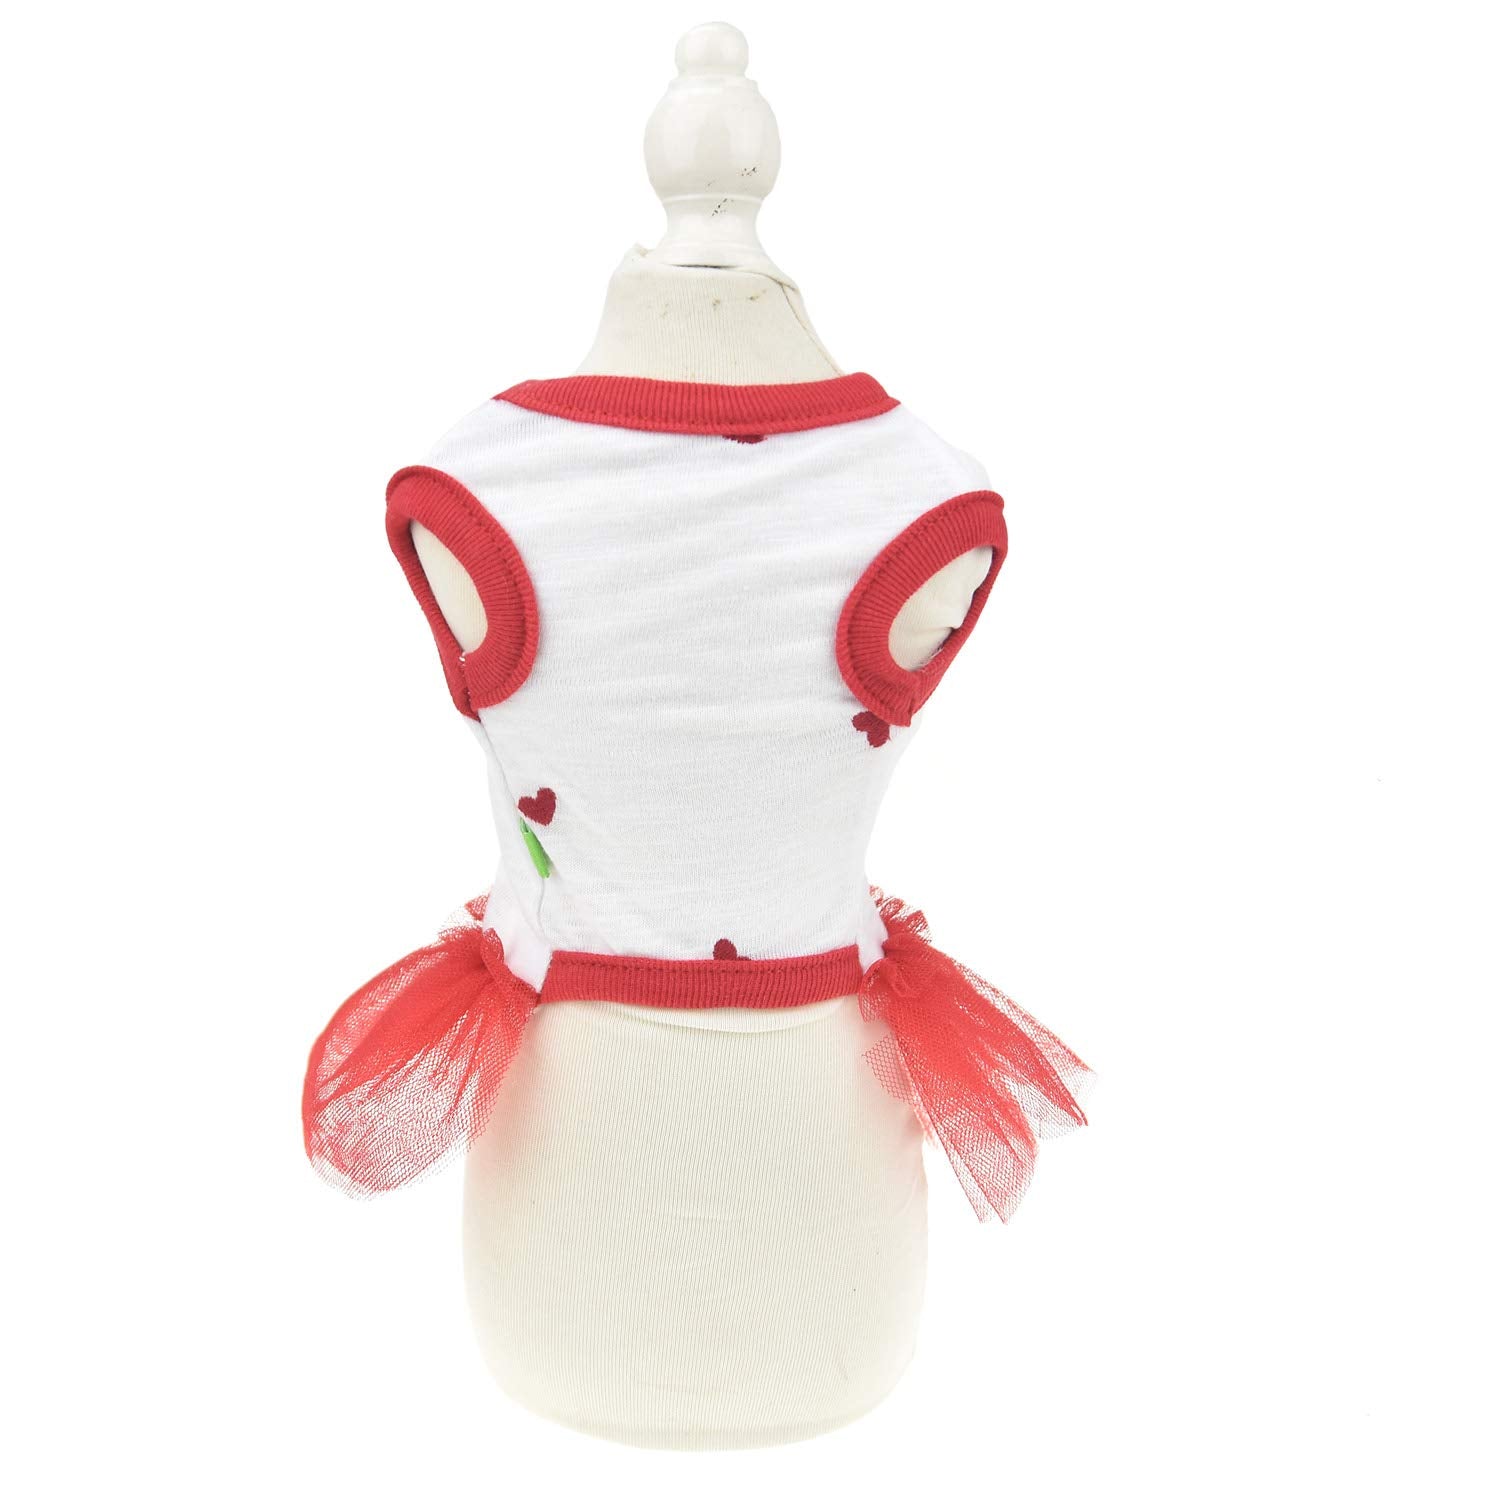 Rabbit Dress Clothes for Mini Animal Chinchilla Easter Costume